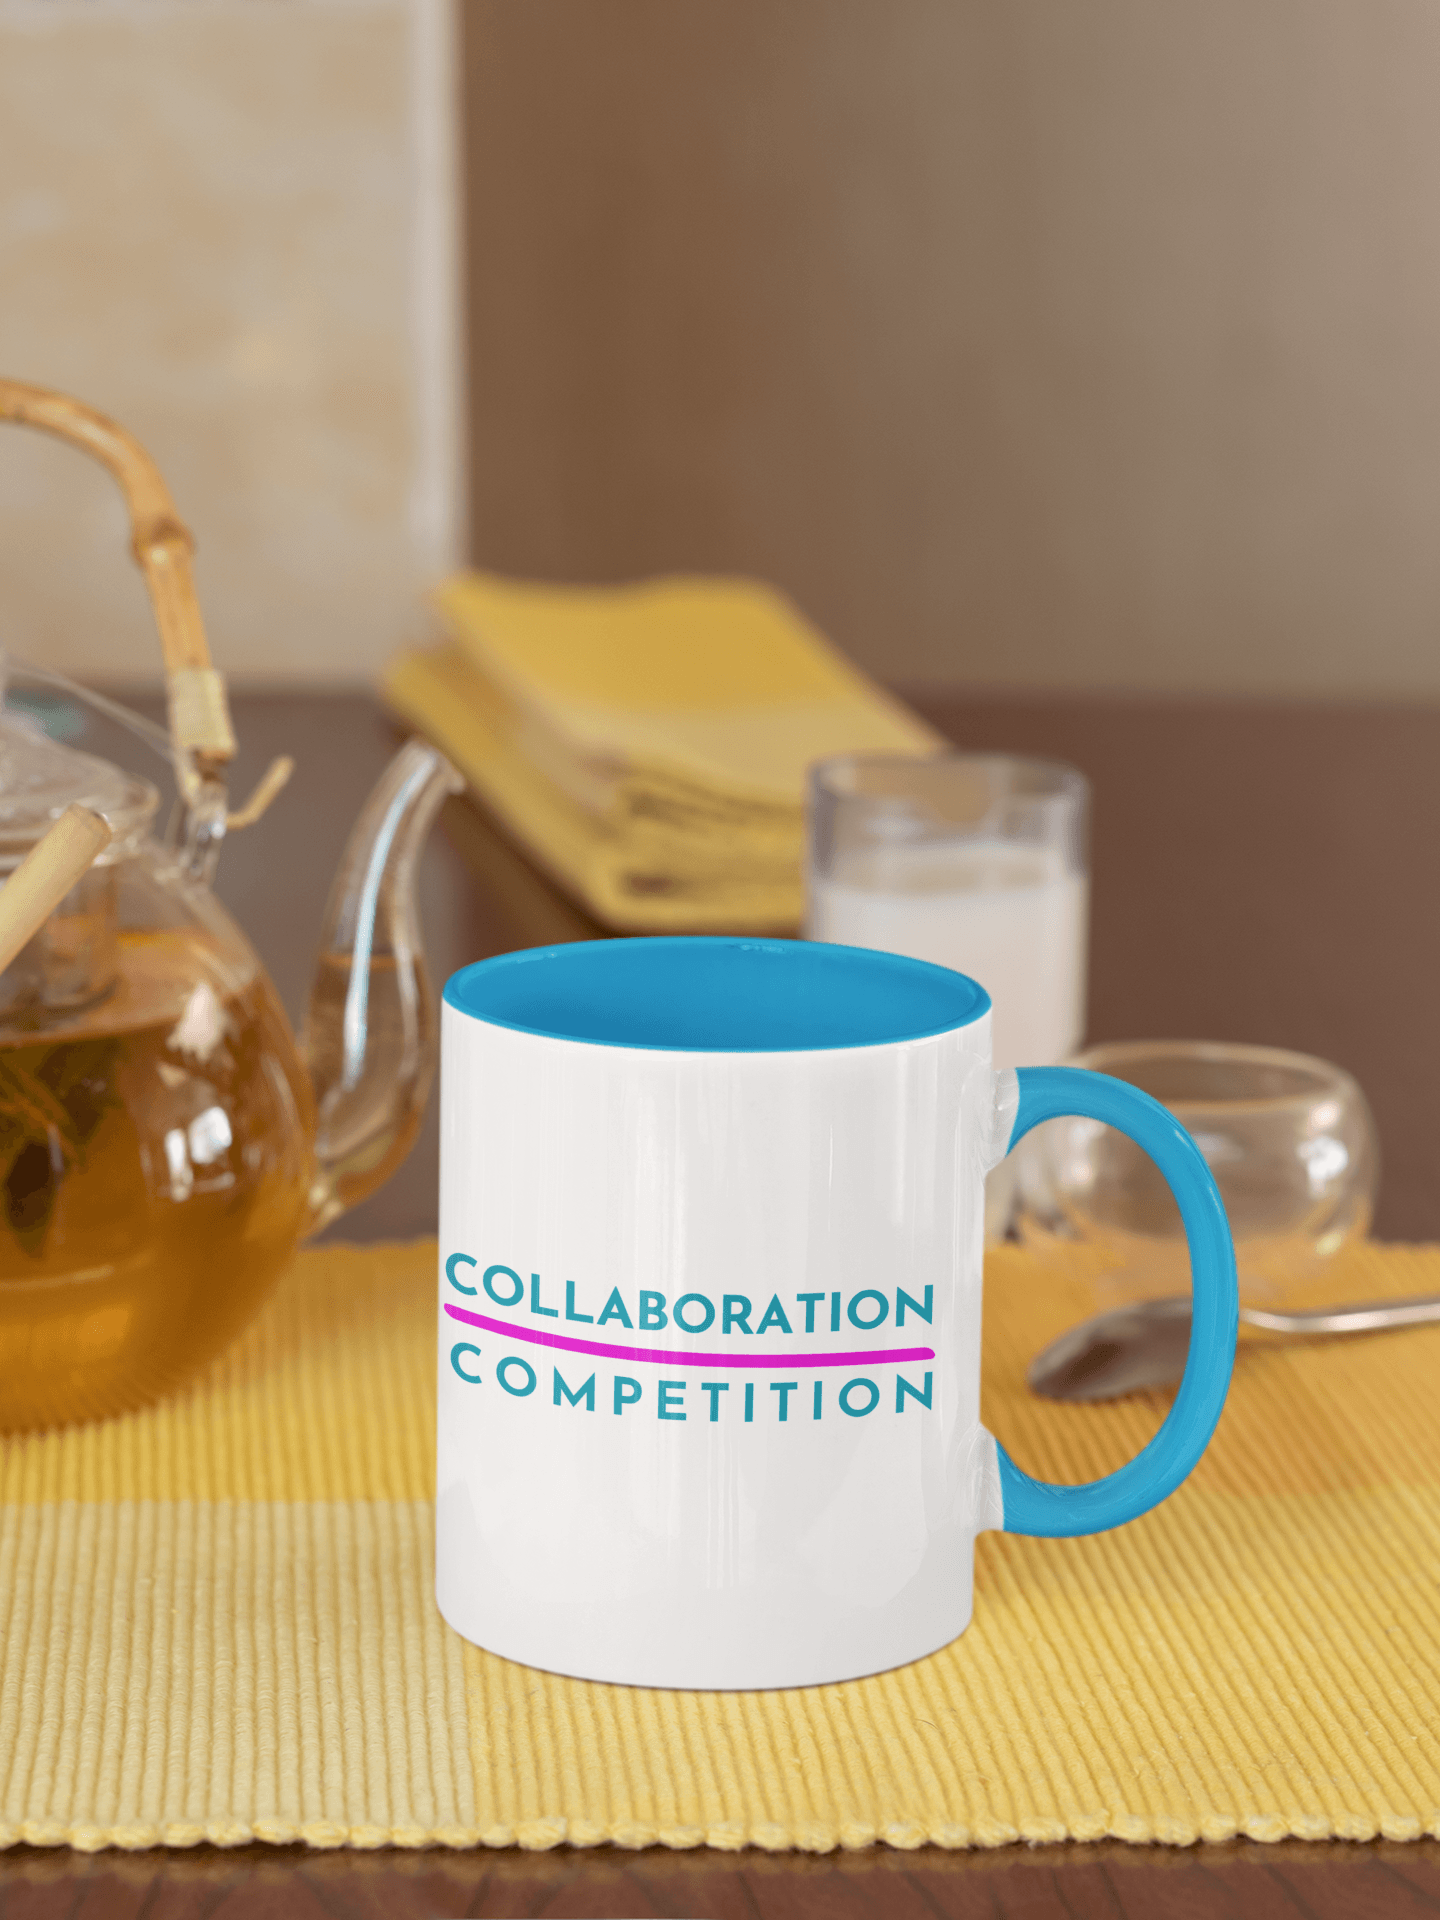 Collaboration Over Competition Mug